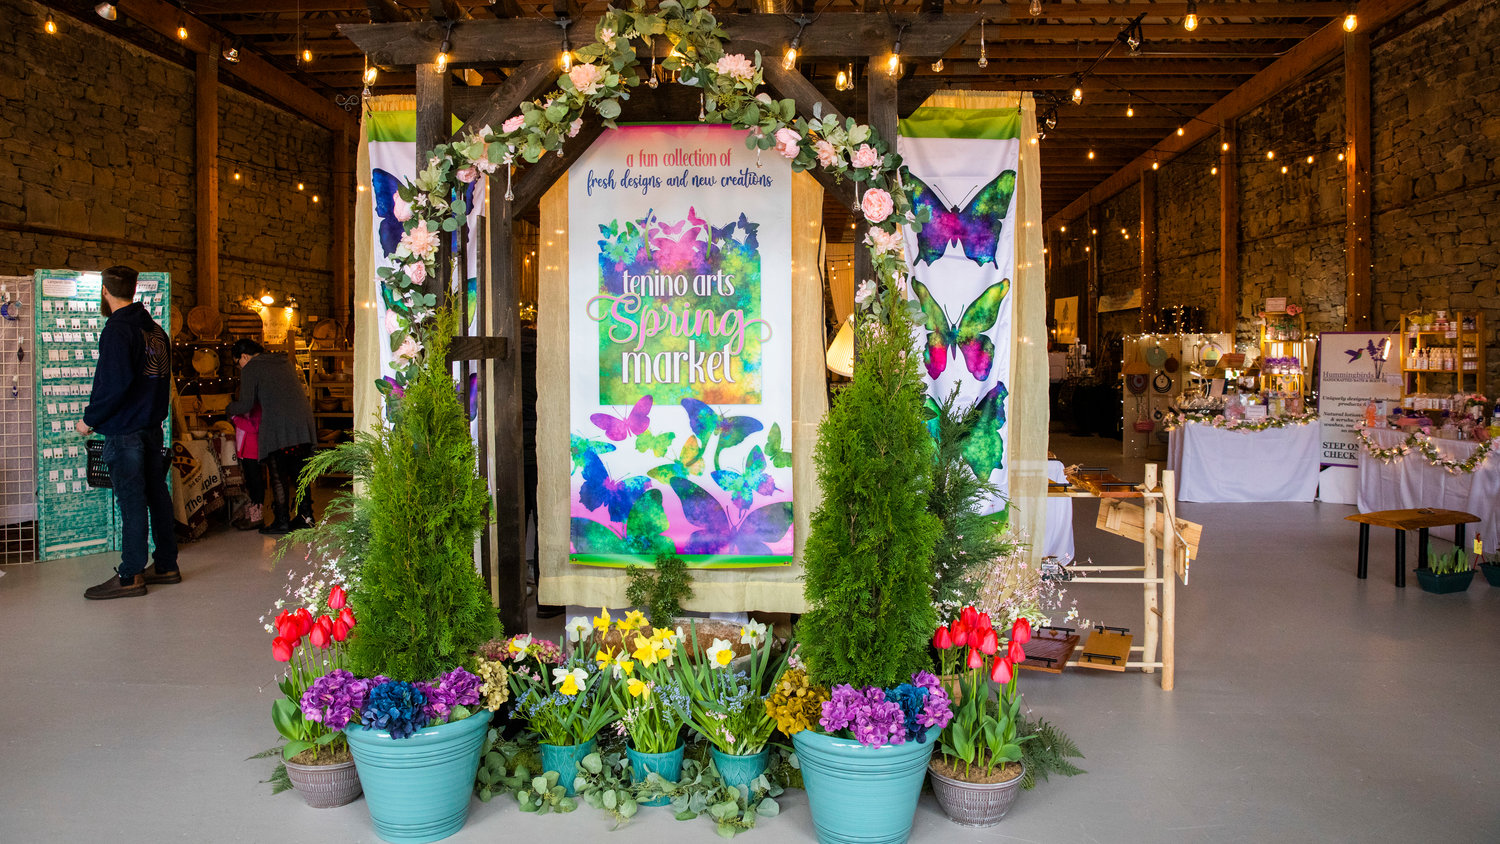 The Tenino Arts Spring Market featured 32 regional artisans inside the Kodiak Room on Sunday.